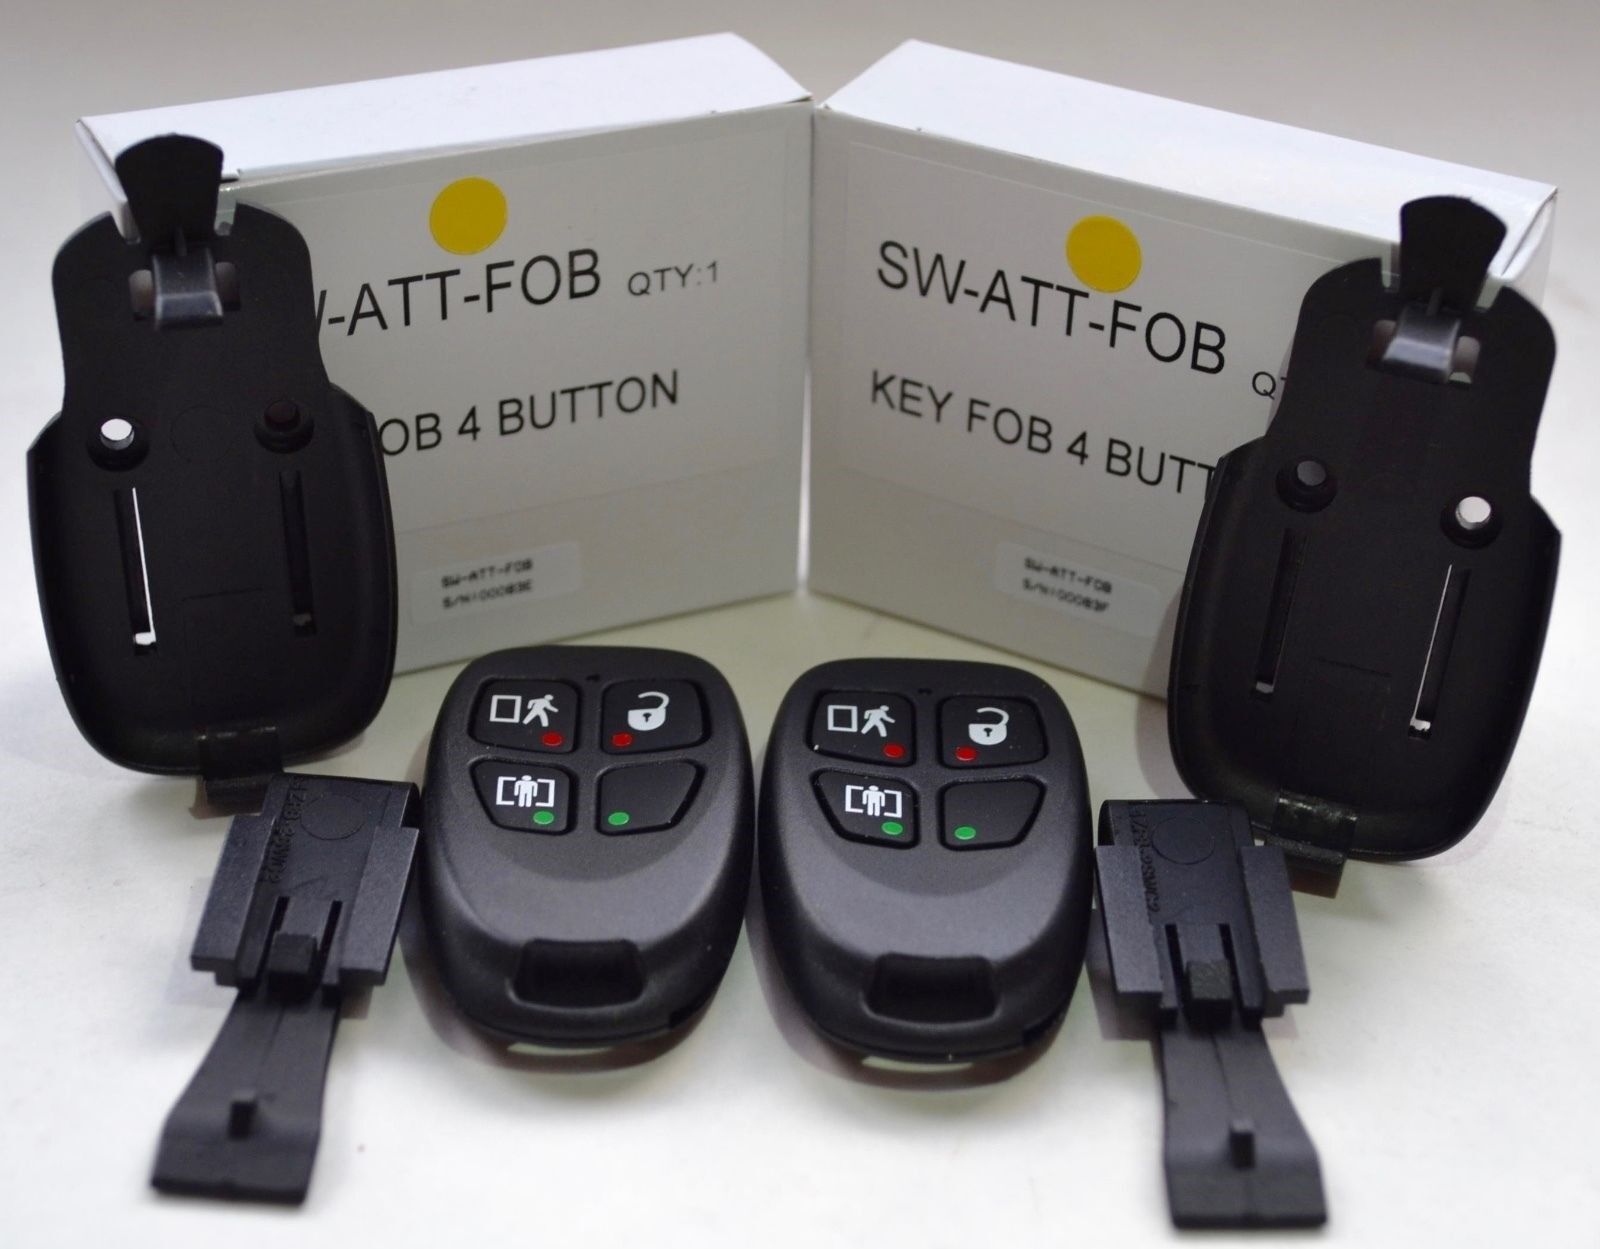 AT&T Security Model SW-ATT-FOB Four Button Key FOB Lot of 2 AT&T SW-ATT-FOB